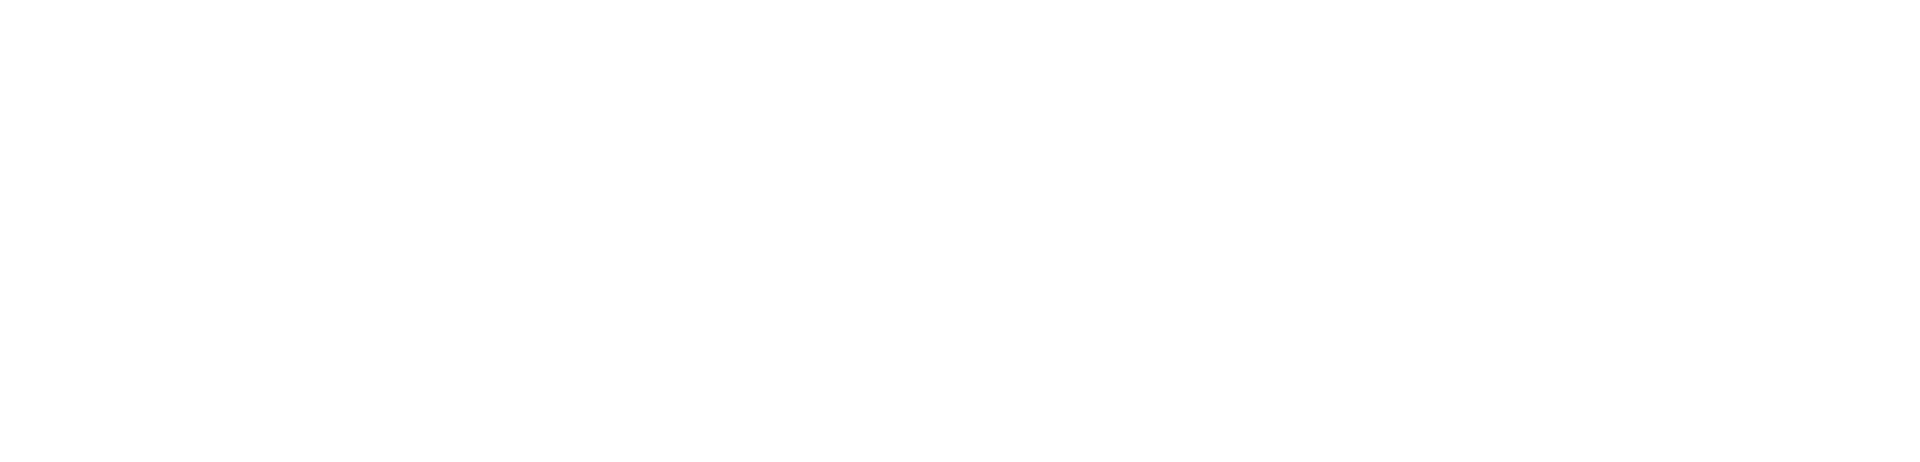 protecfire GmbH logo